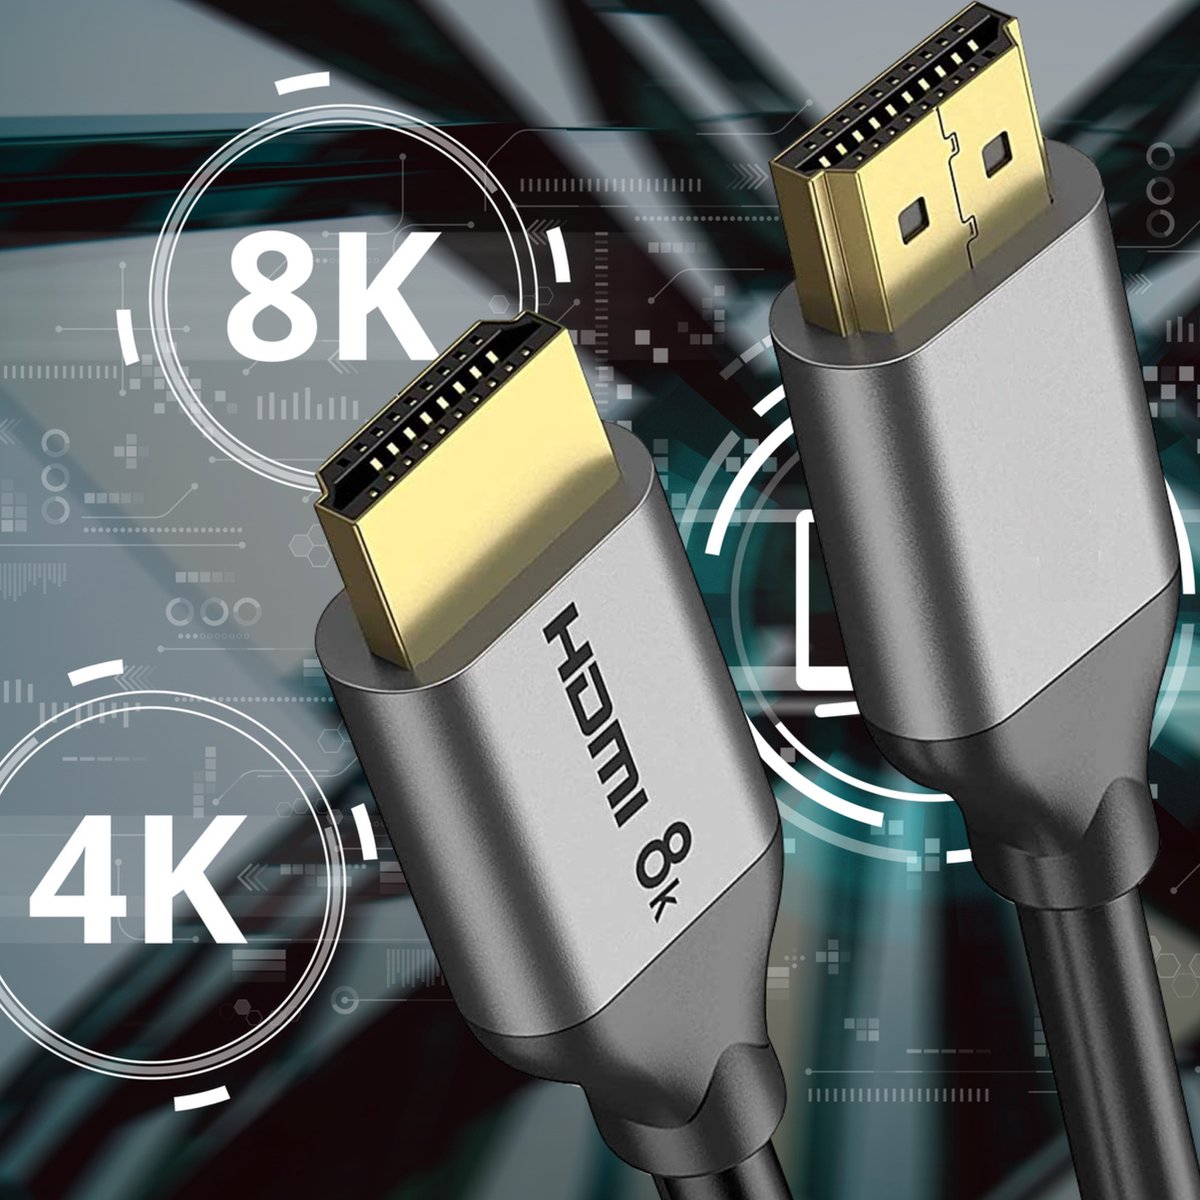 HDMI Kabel 8K - 3 Meter - HDMI Kabel 2.1 - Ultra HD 8K + 4K 120hz - HDMI naar HDMI Kabel - 8K HDMI Kabel - Ondersteunt alle oudere HDMI versies zoals 4K - Geschikt voor PS5, XBOX - Accessoires - 3D, Dynamic HDR, ARC, eARC, VRR, QMS, QFT, ALLM